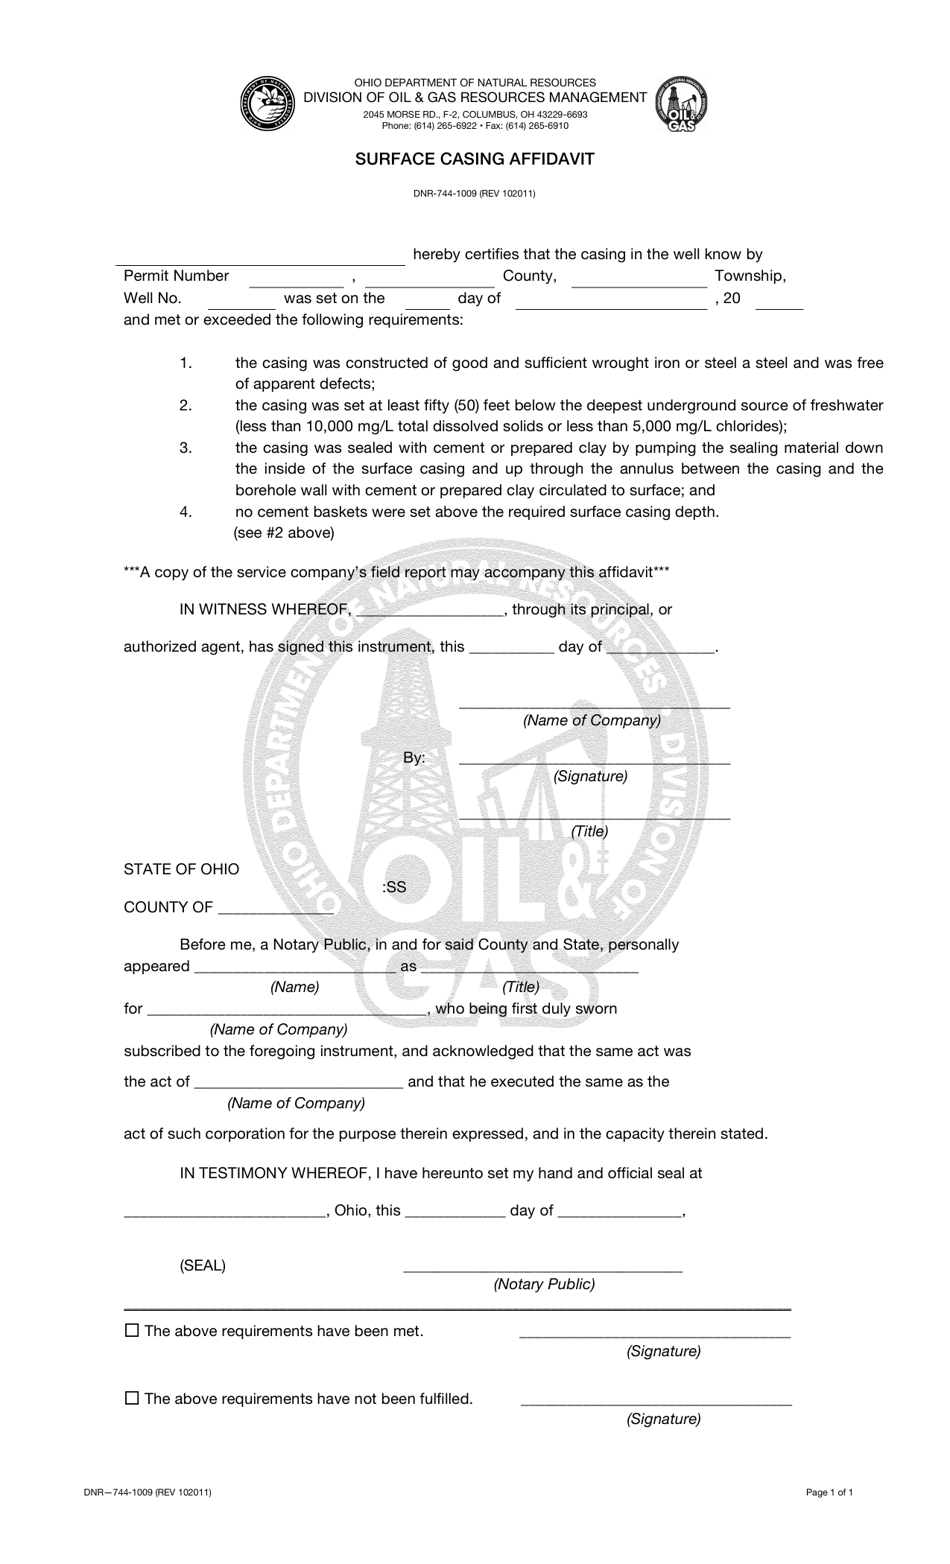 Form DNR744-1009 Surface Casing Affidavit - Ohio, Page 1